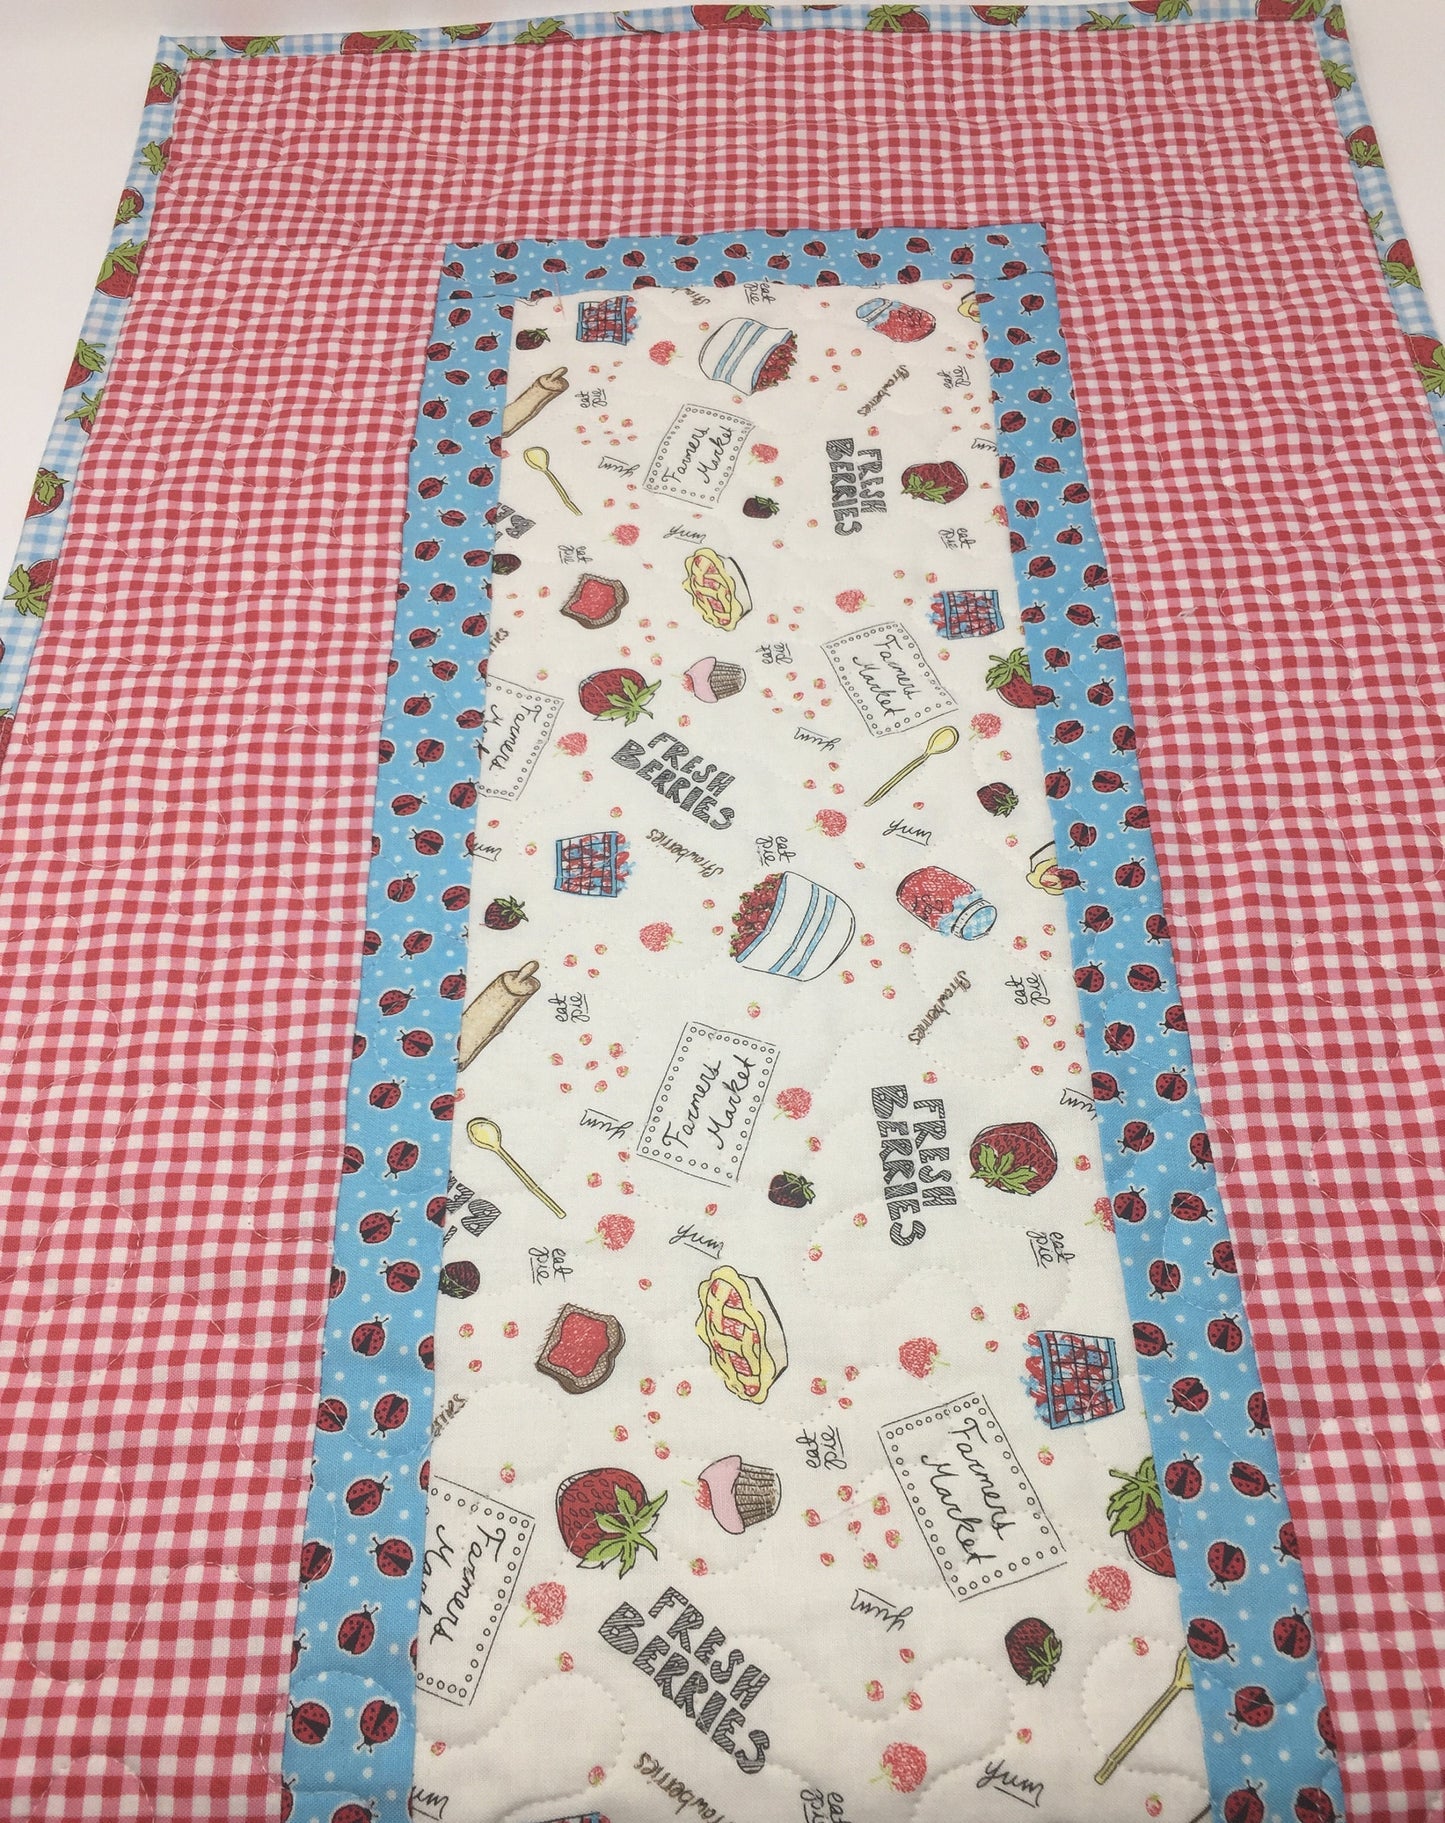 Summer Picnic Table Runner Quilt, Red, Blue, Lady Bugs, Strawberries, Handmade Table Runner Quilt